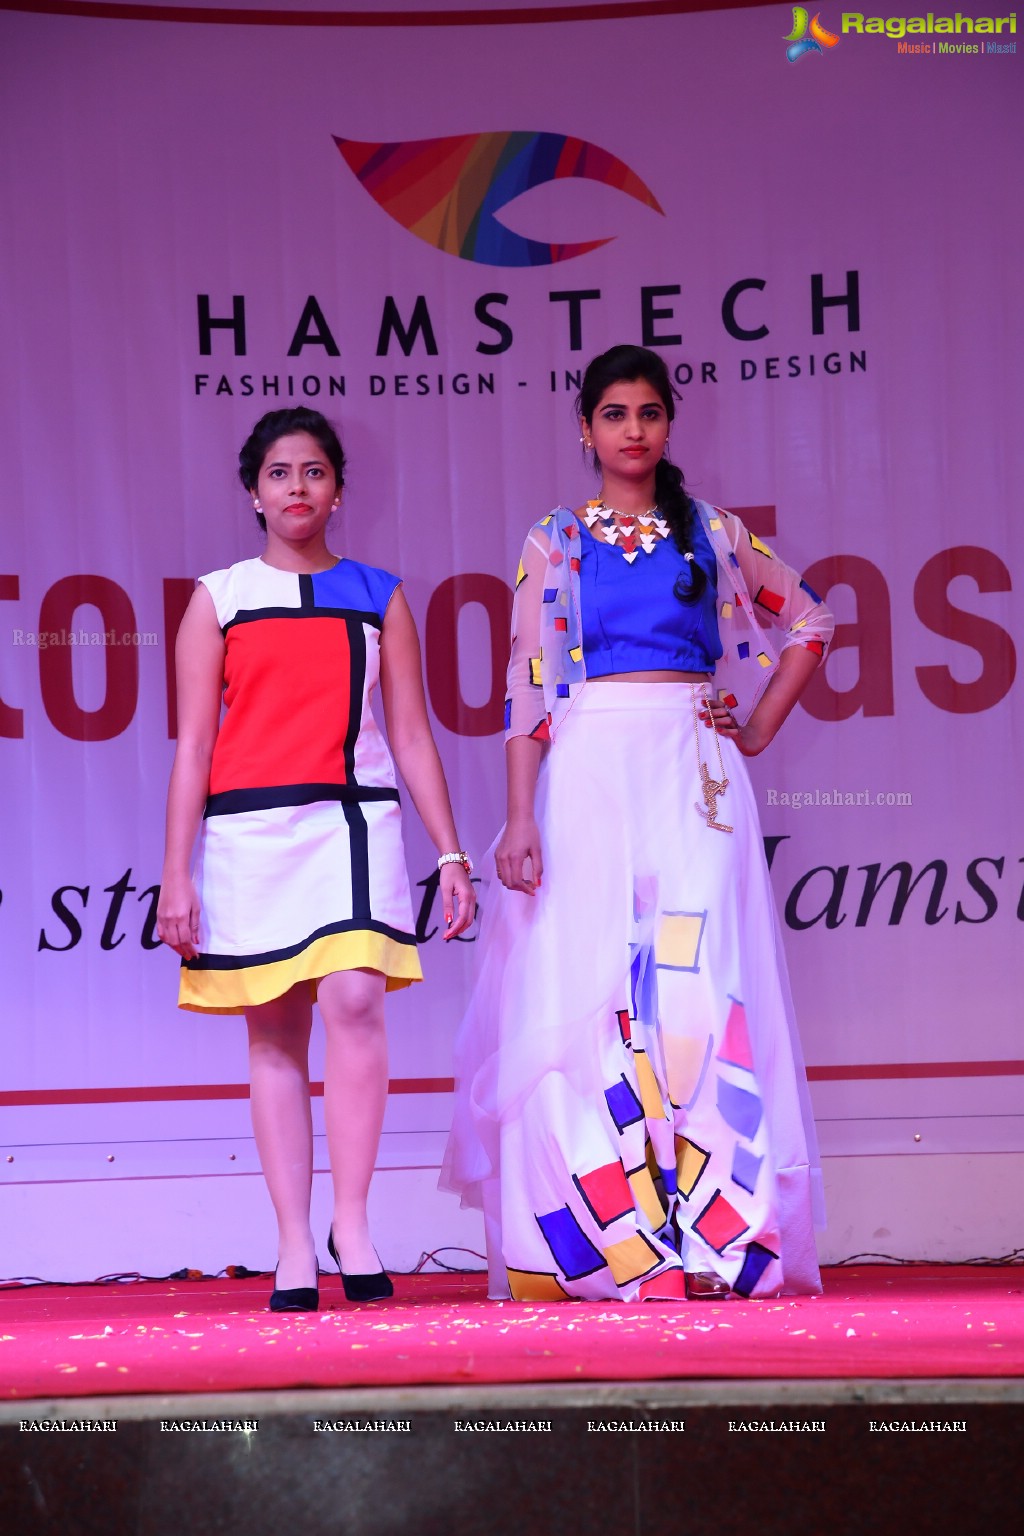 Hamstech - History of Fashion